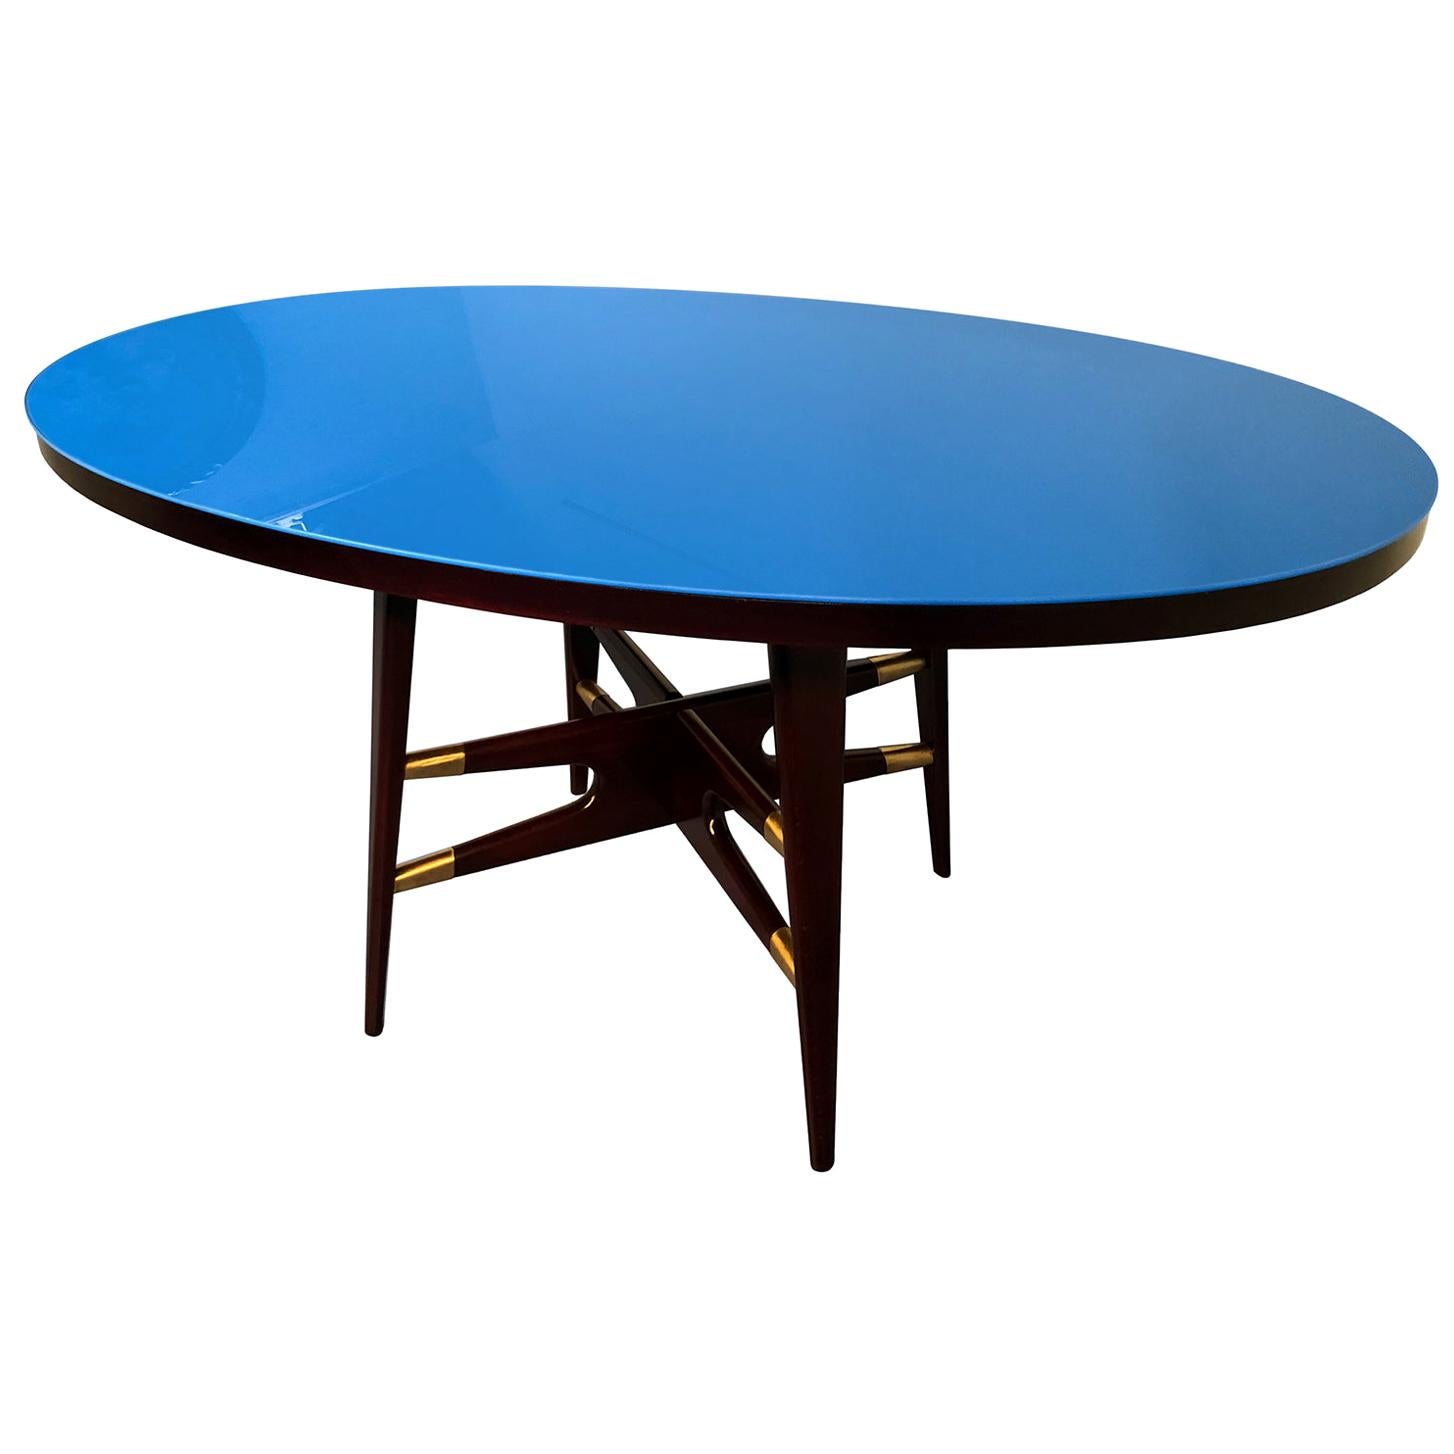 Italian Mid-Century Oval Blue Dining Table by Silvio Cavatorta, 1950s